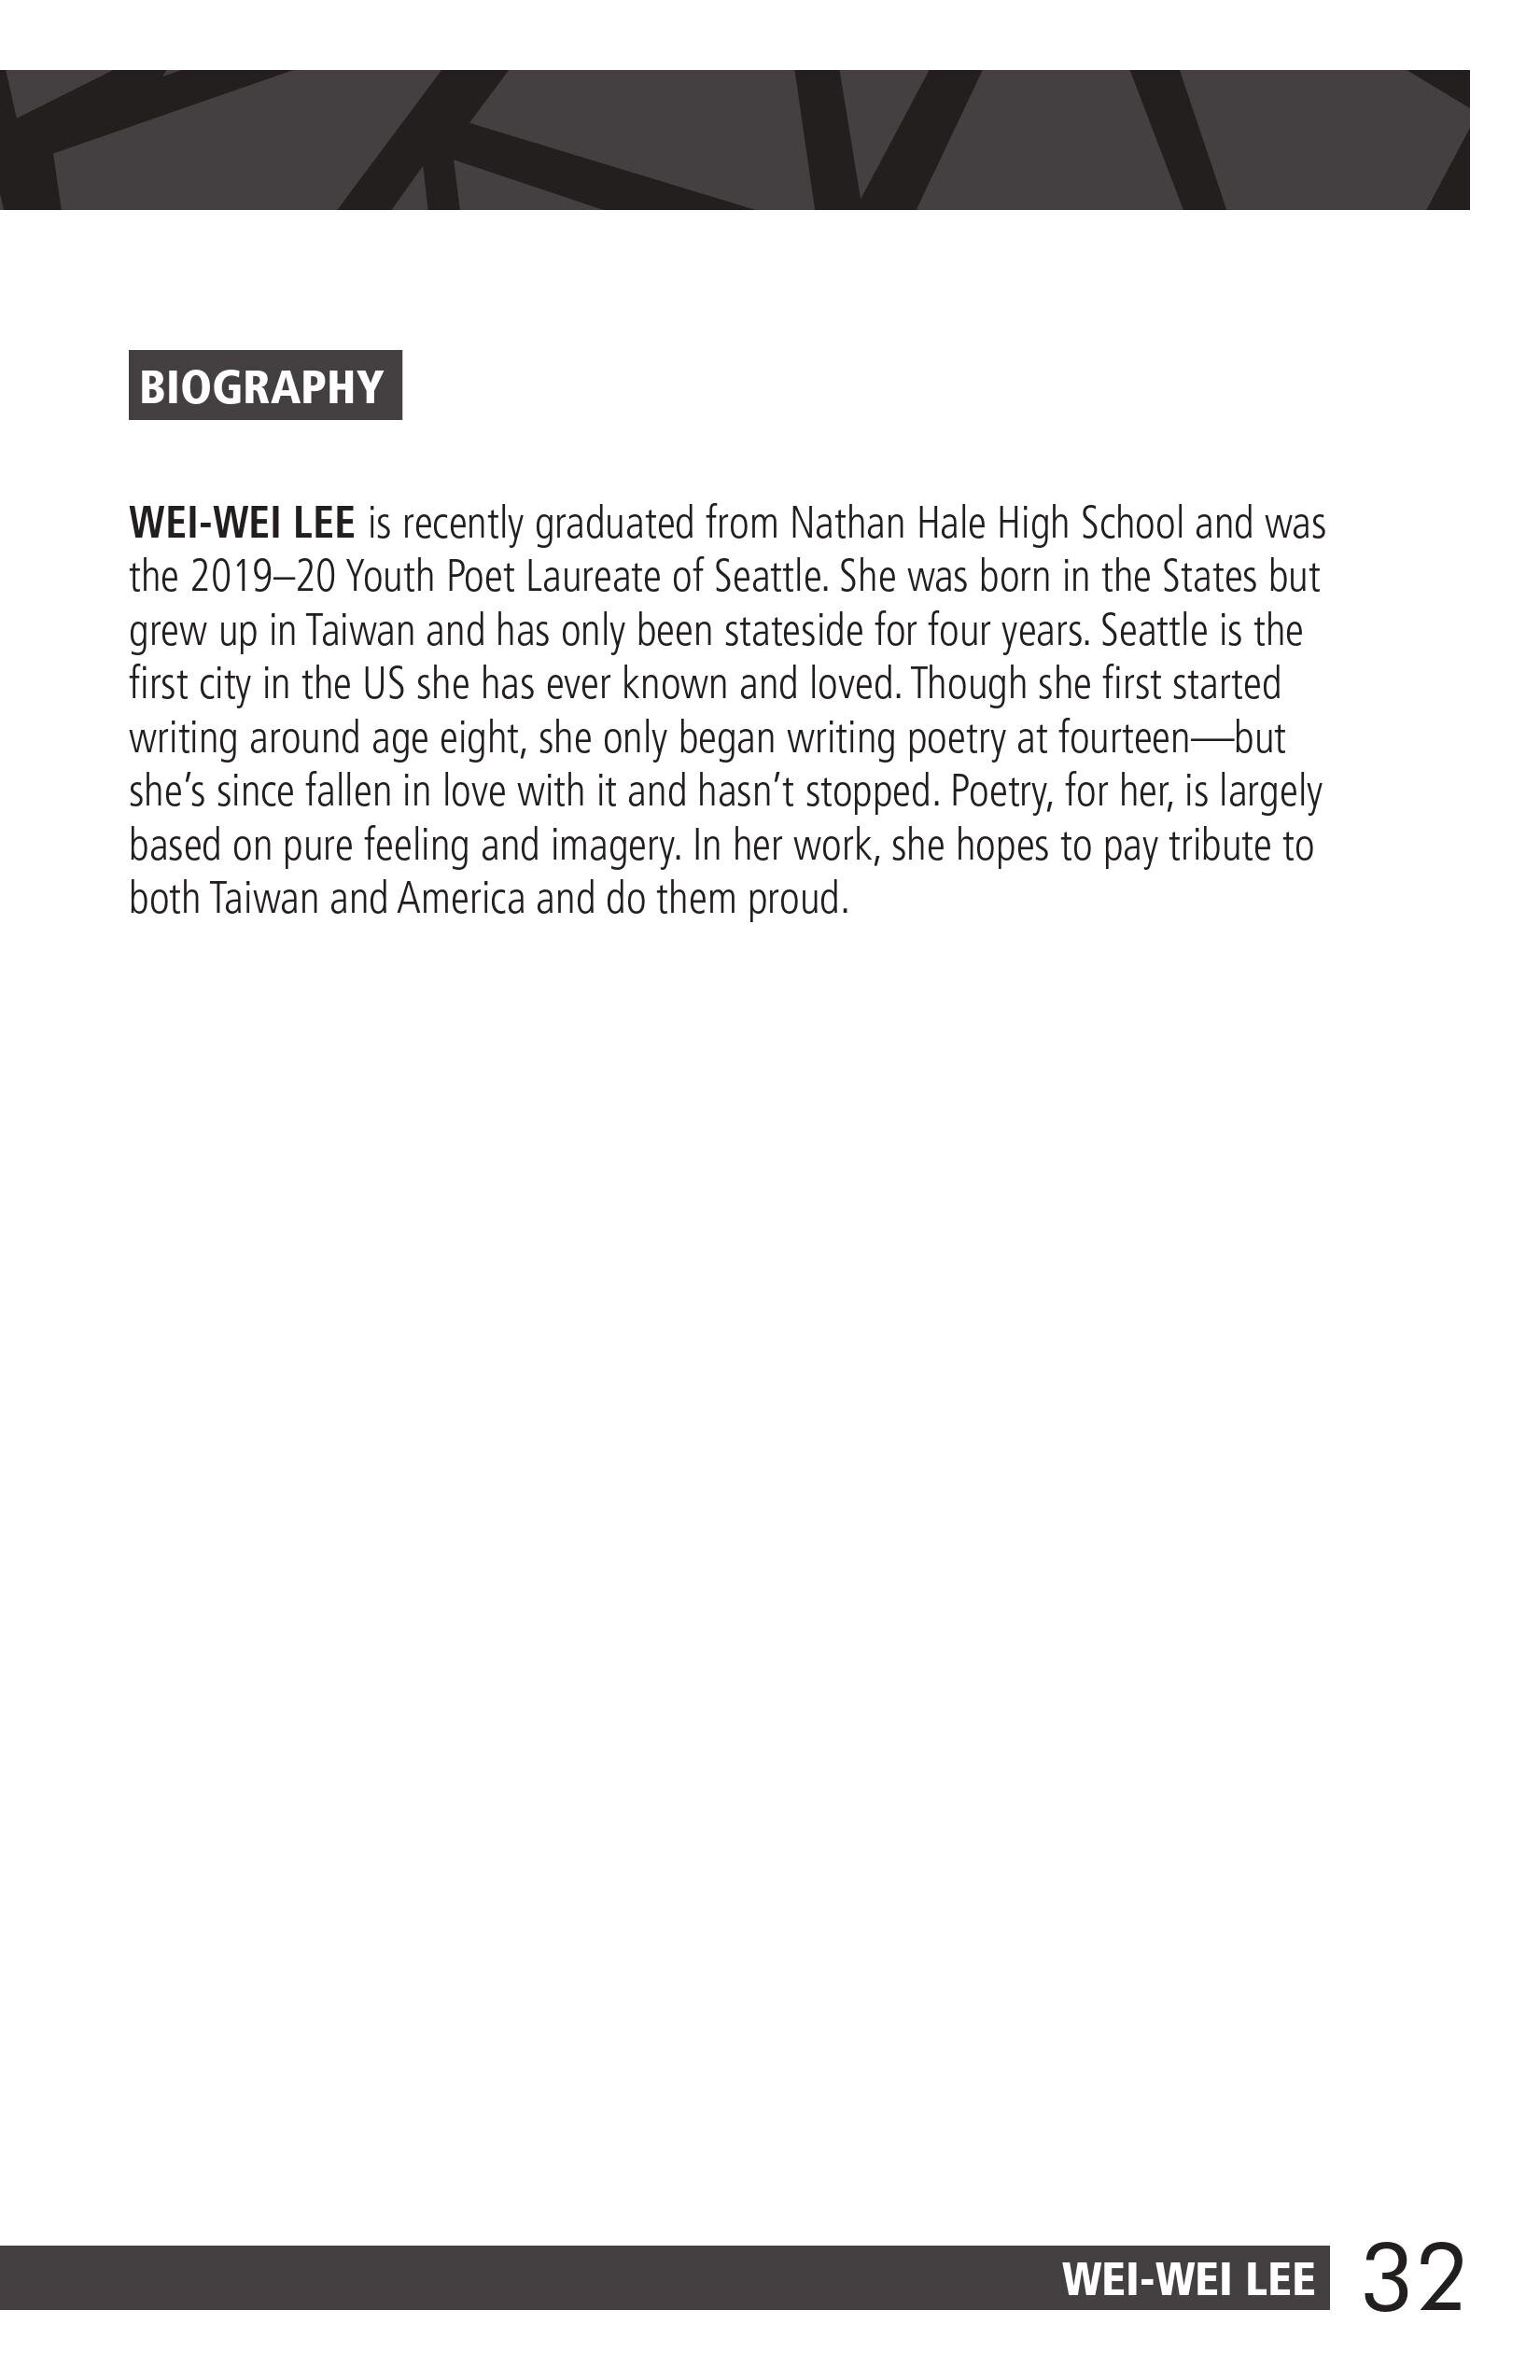 WeiWei Page 32 Bio.jpg